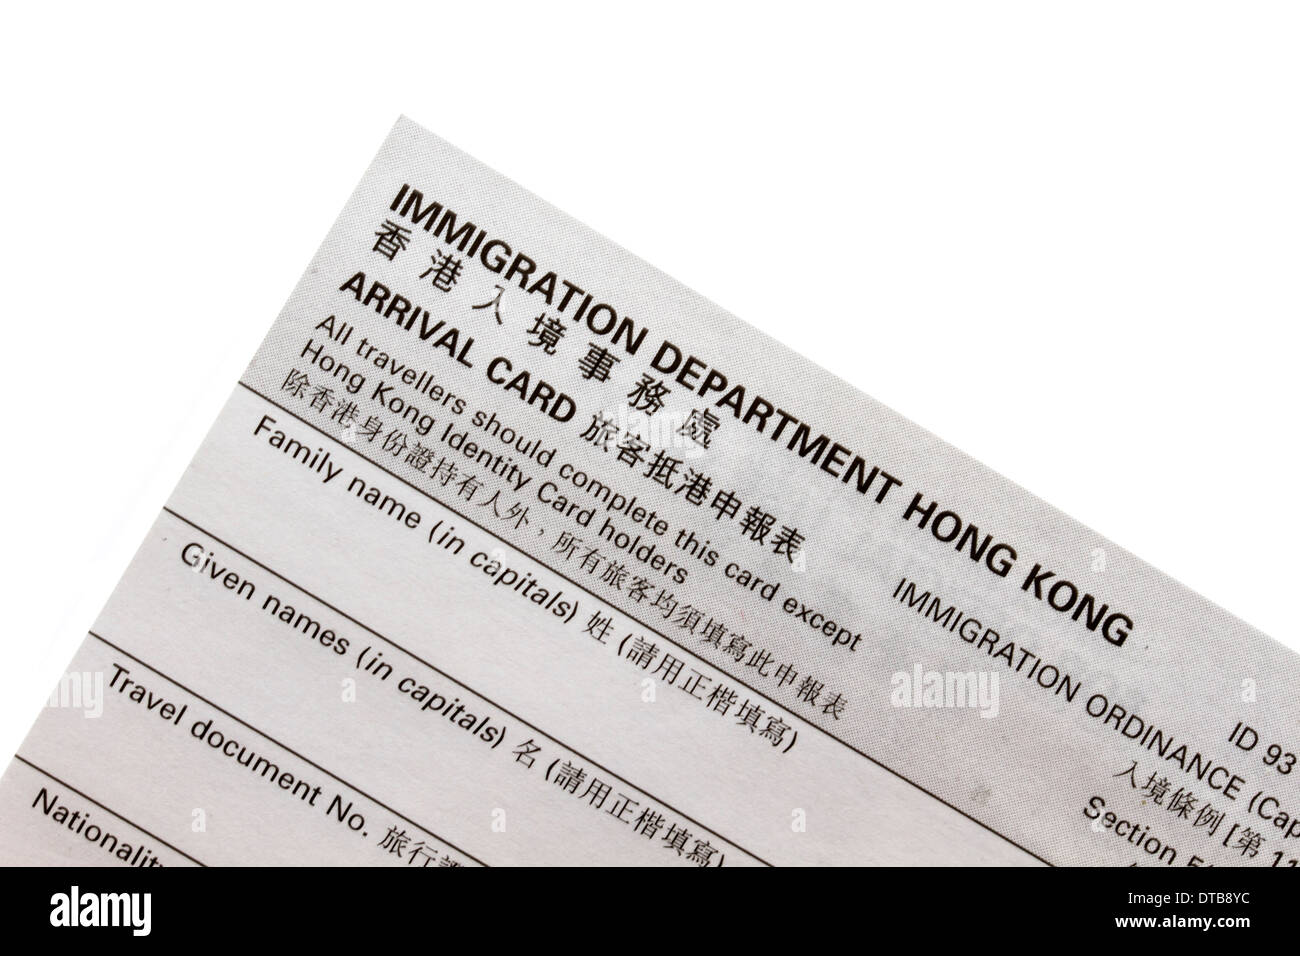 El departamento de inmigración de Hong Kong tarjeta de llegada Foto de stock